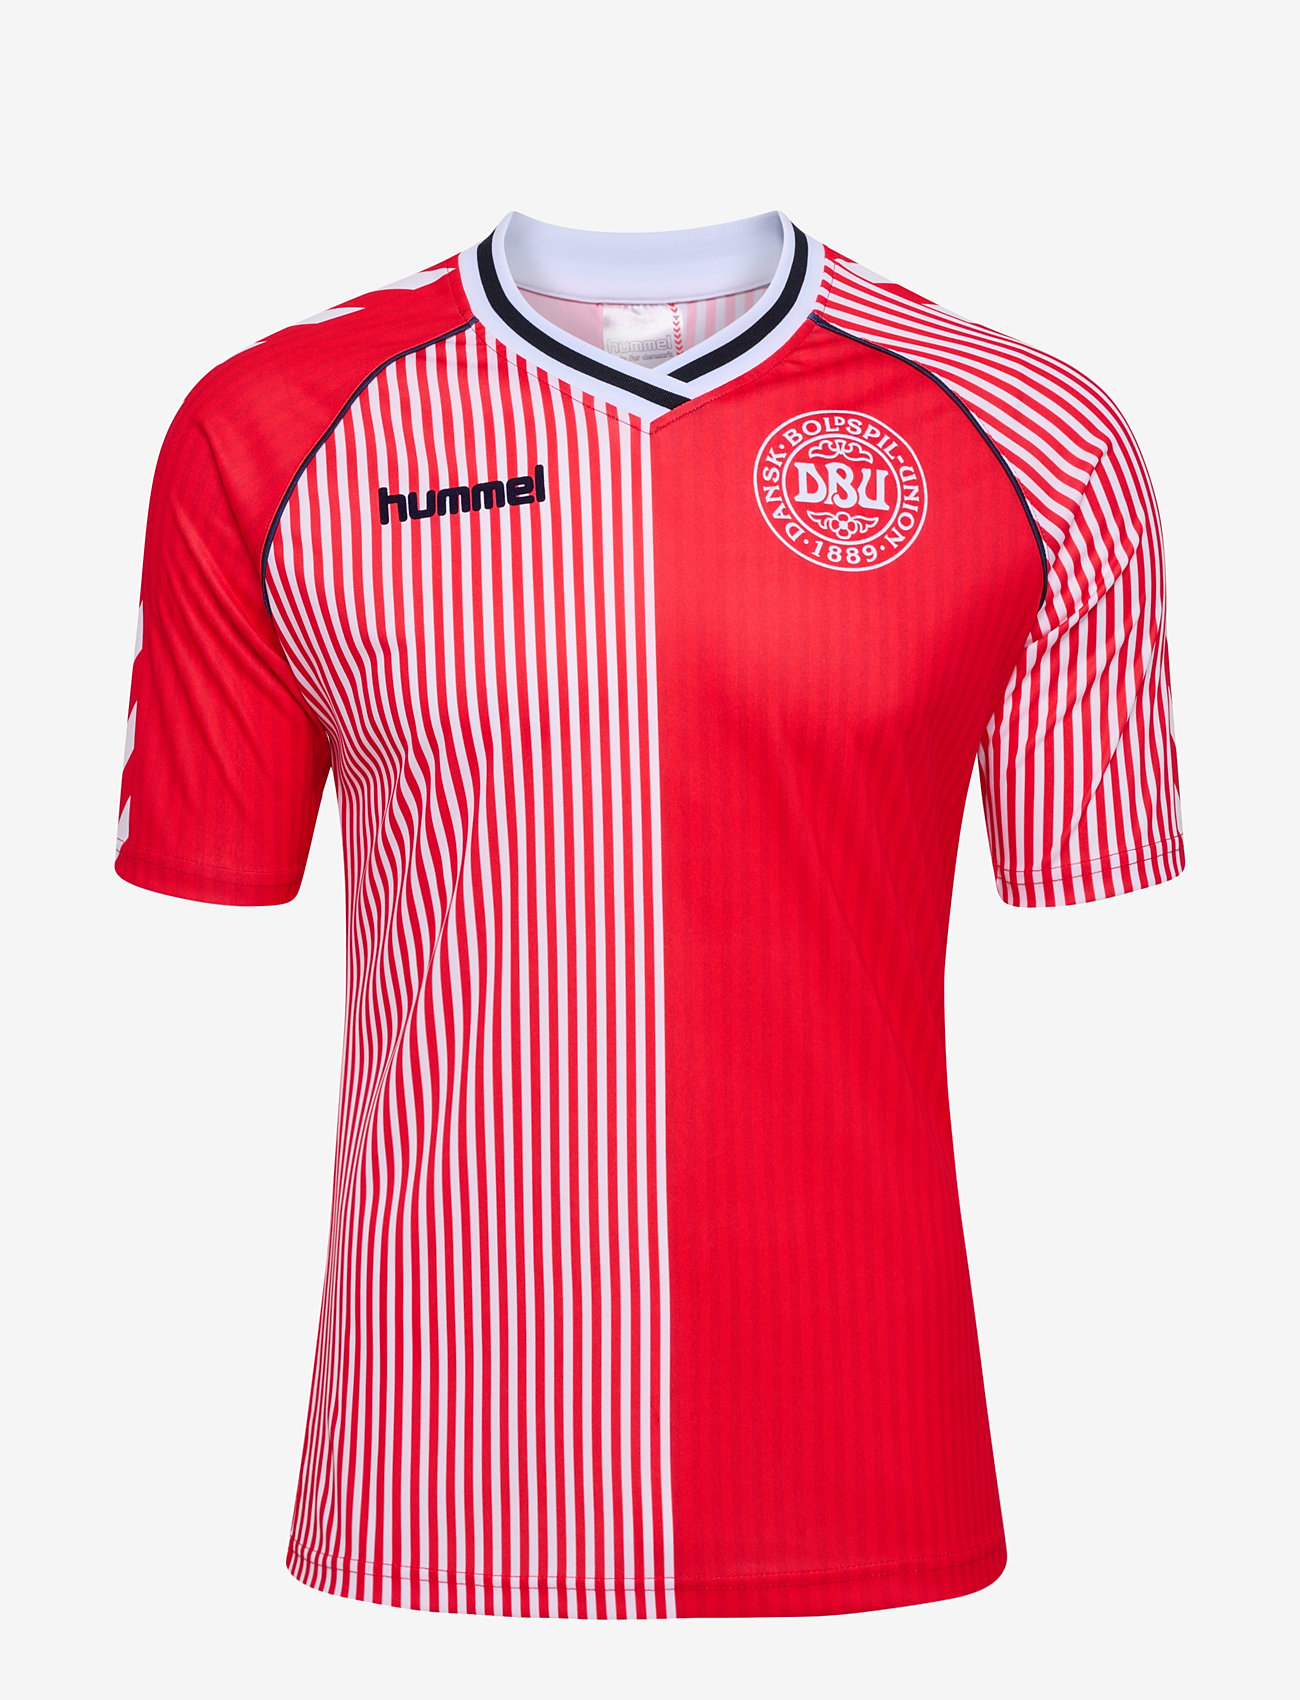 Hummel - DBU 86 REPLICA JERSEY S/S - football shirts - red/white - 0